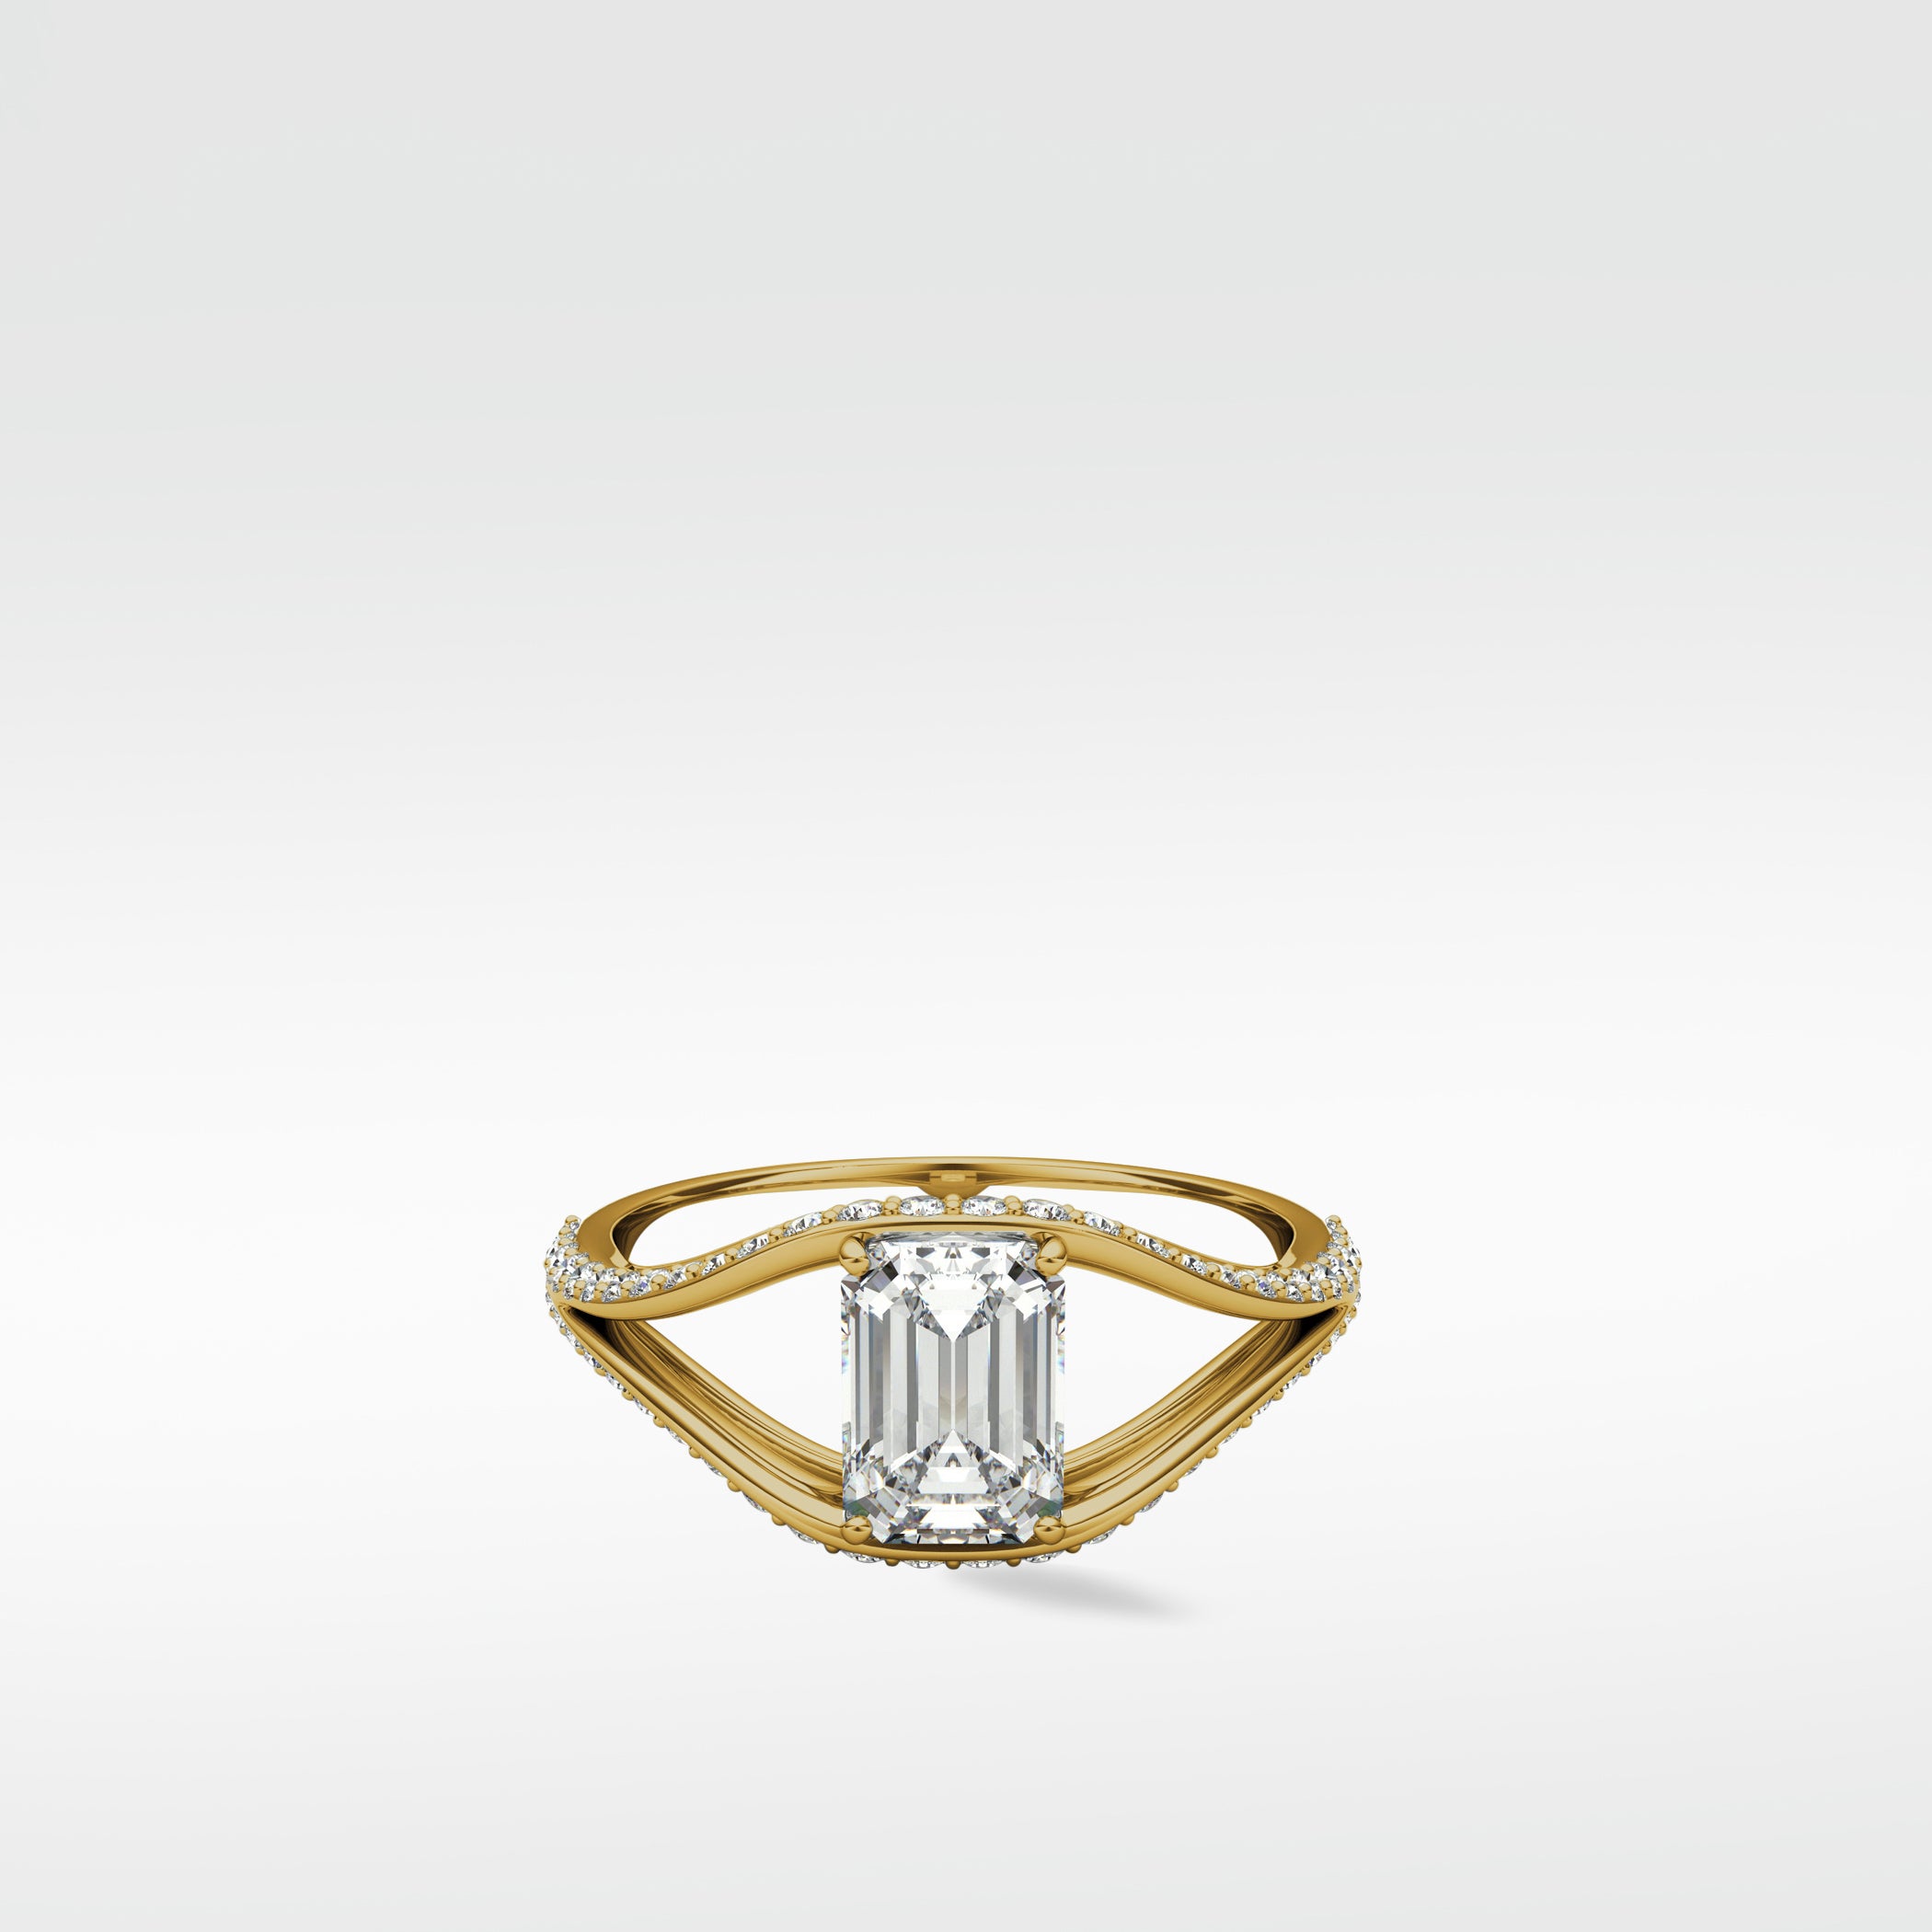 Pine Diamond Engagement Ring